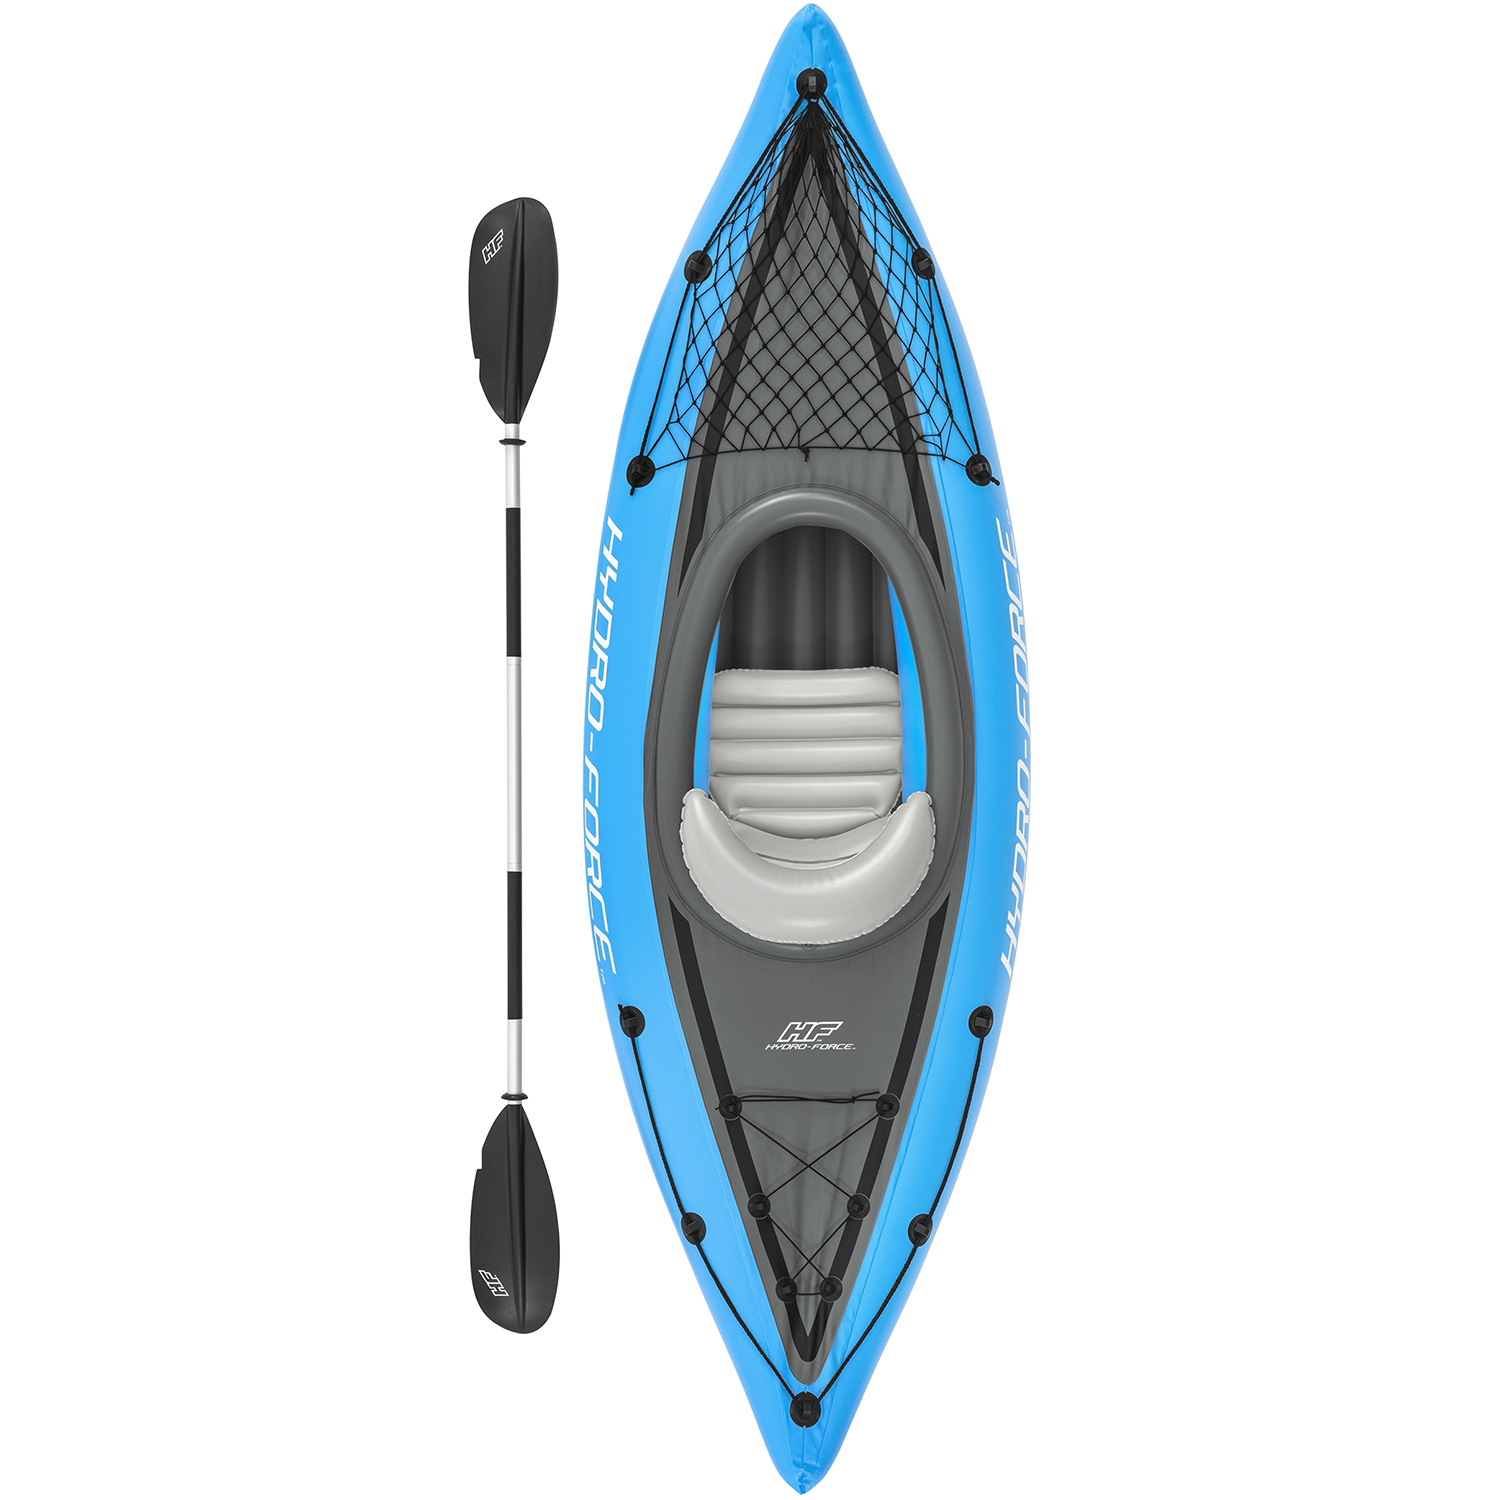 Bestway Hydro force kayak Cove Champion